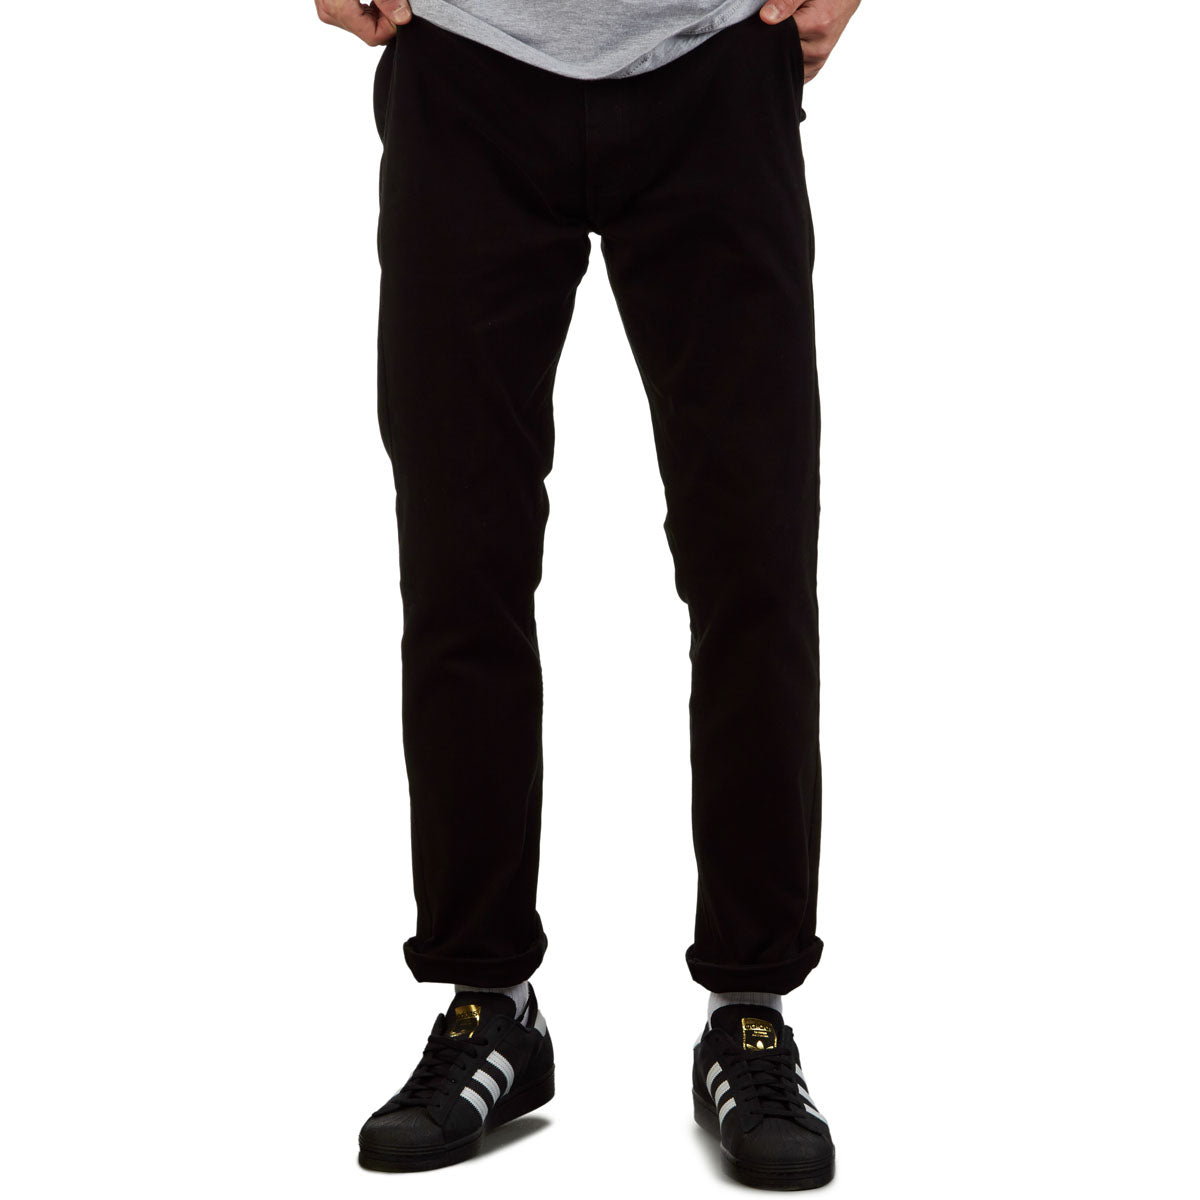 CCS Standard Plus Straight Chino Pants - Black image 4